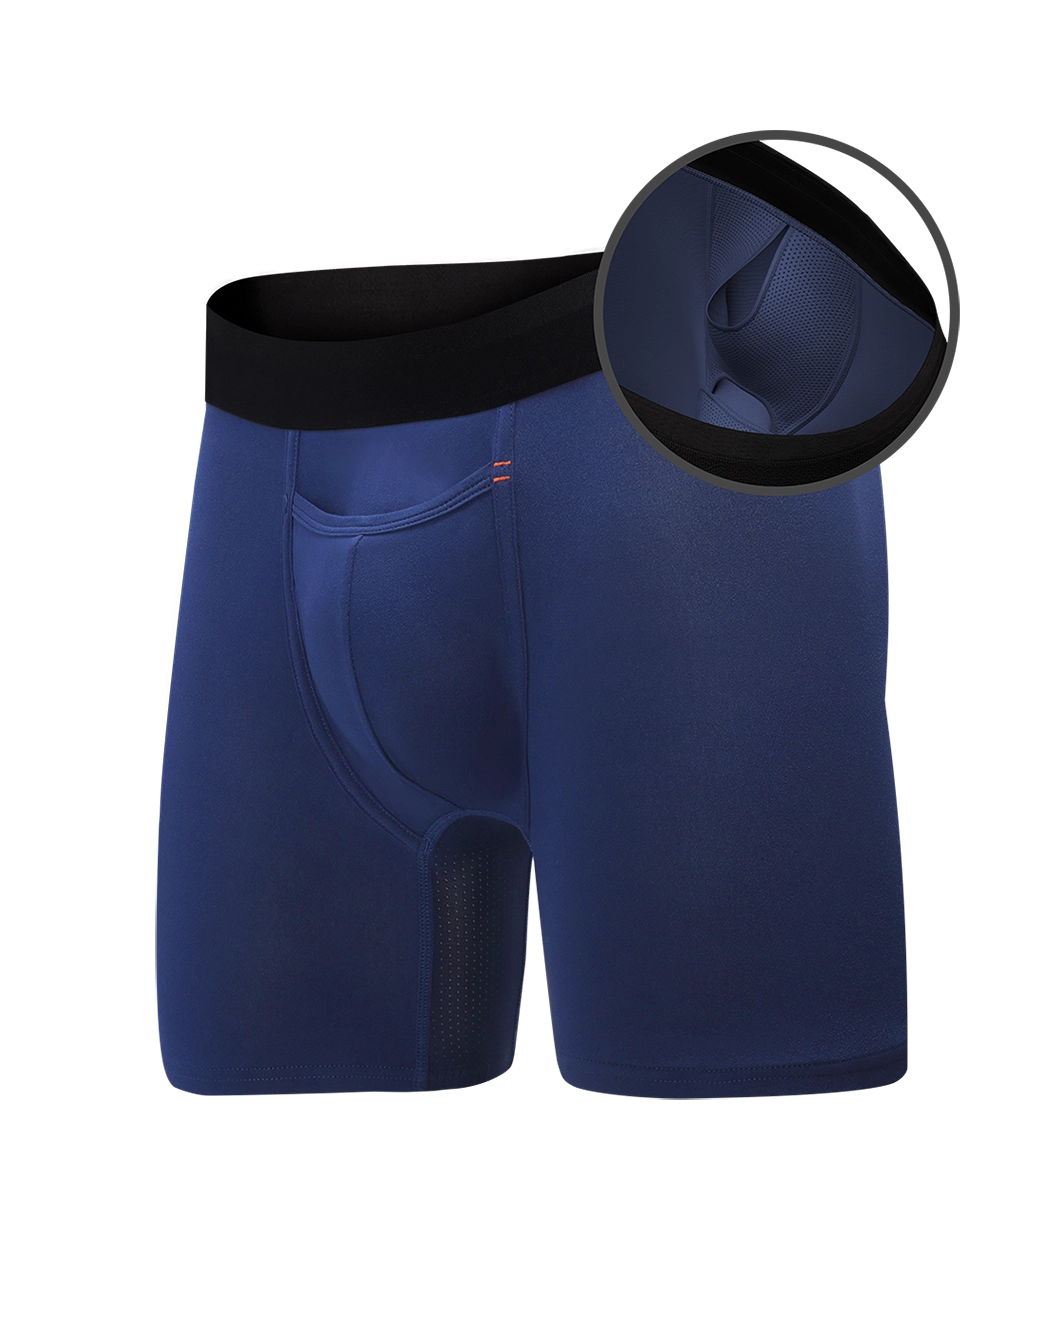 LUEXBOX 4 Packs Pocket Underwear for Men with Secret India